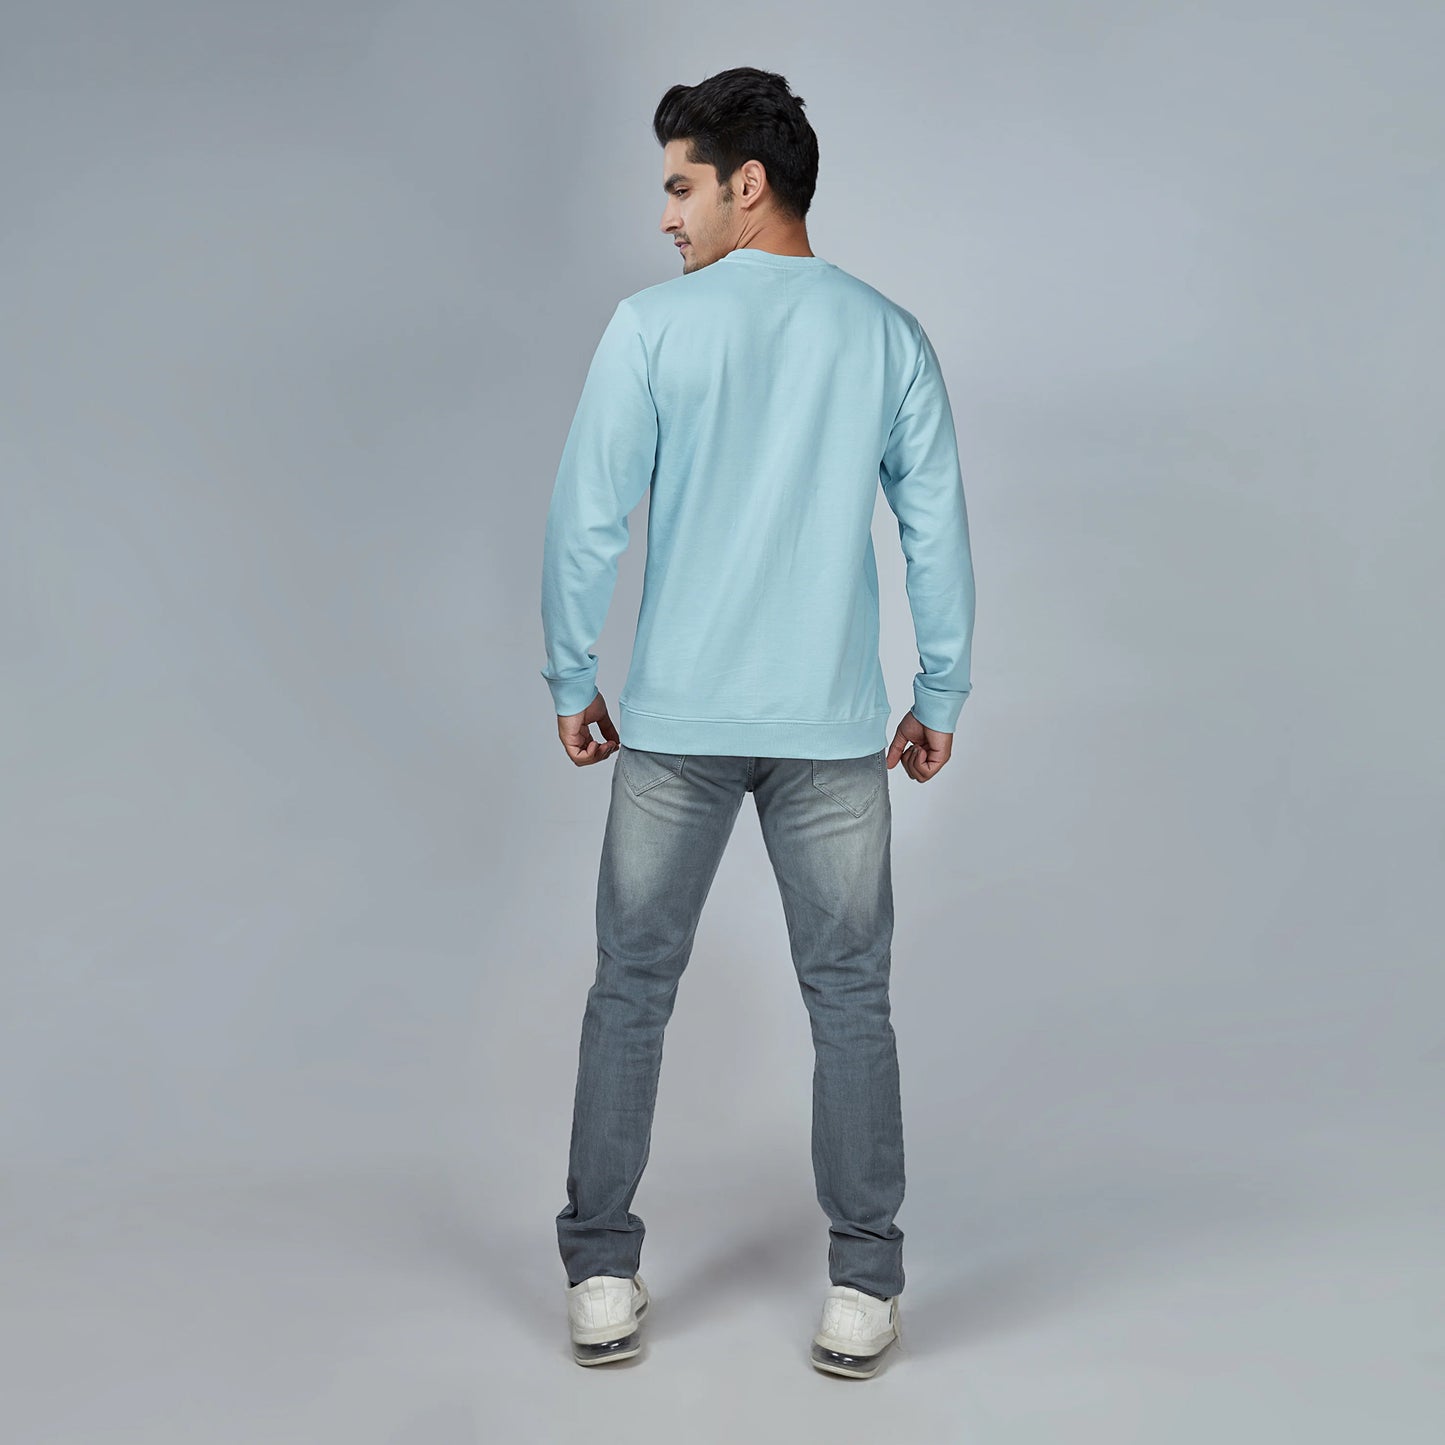 Basic Sky Blue Sweatshirt